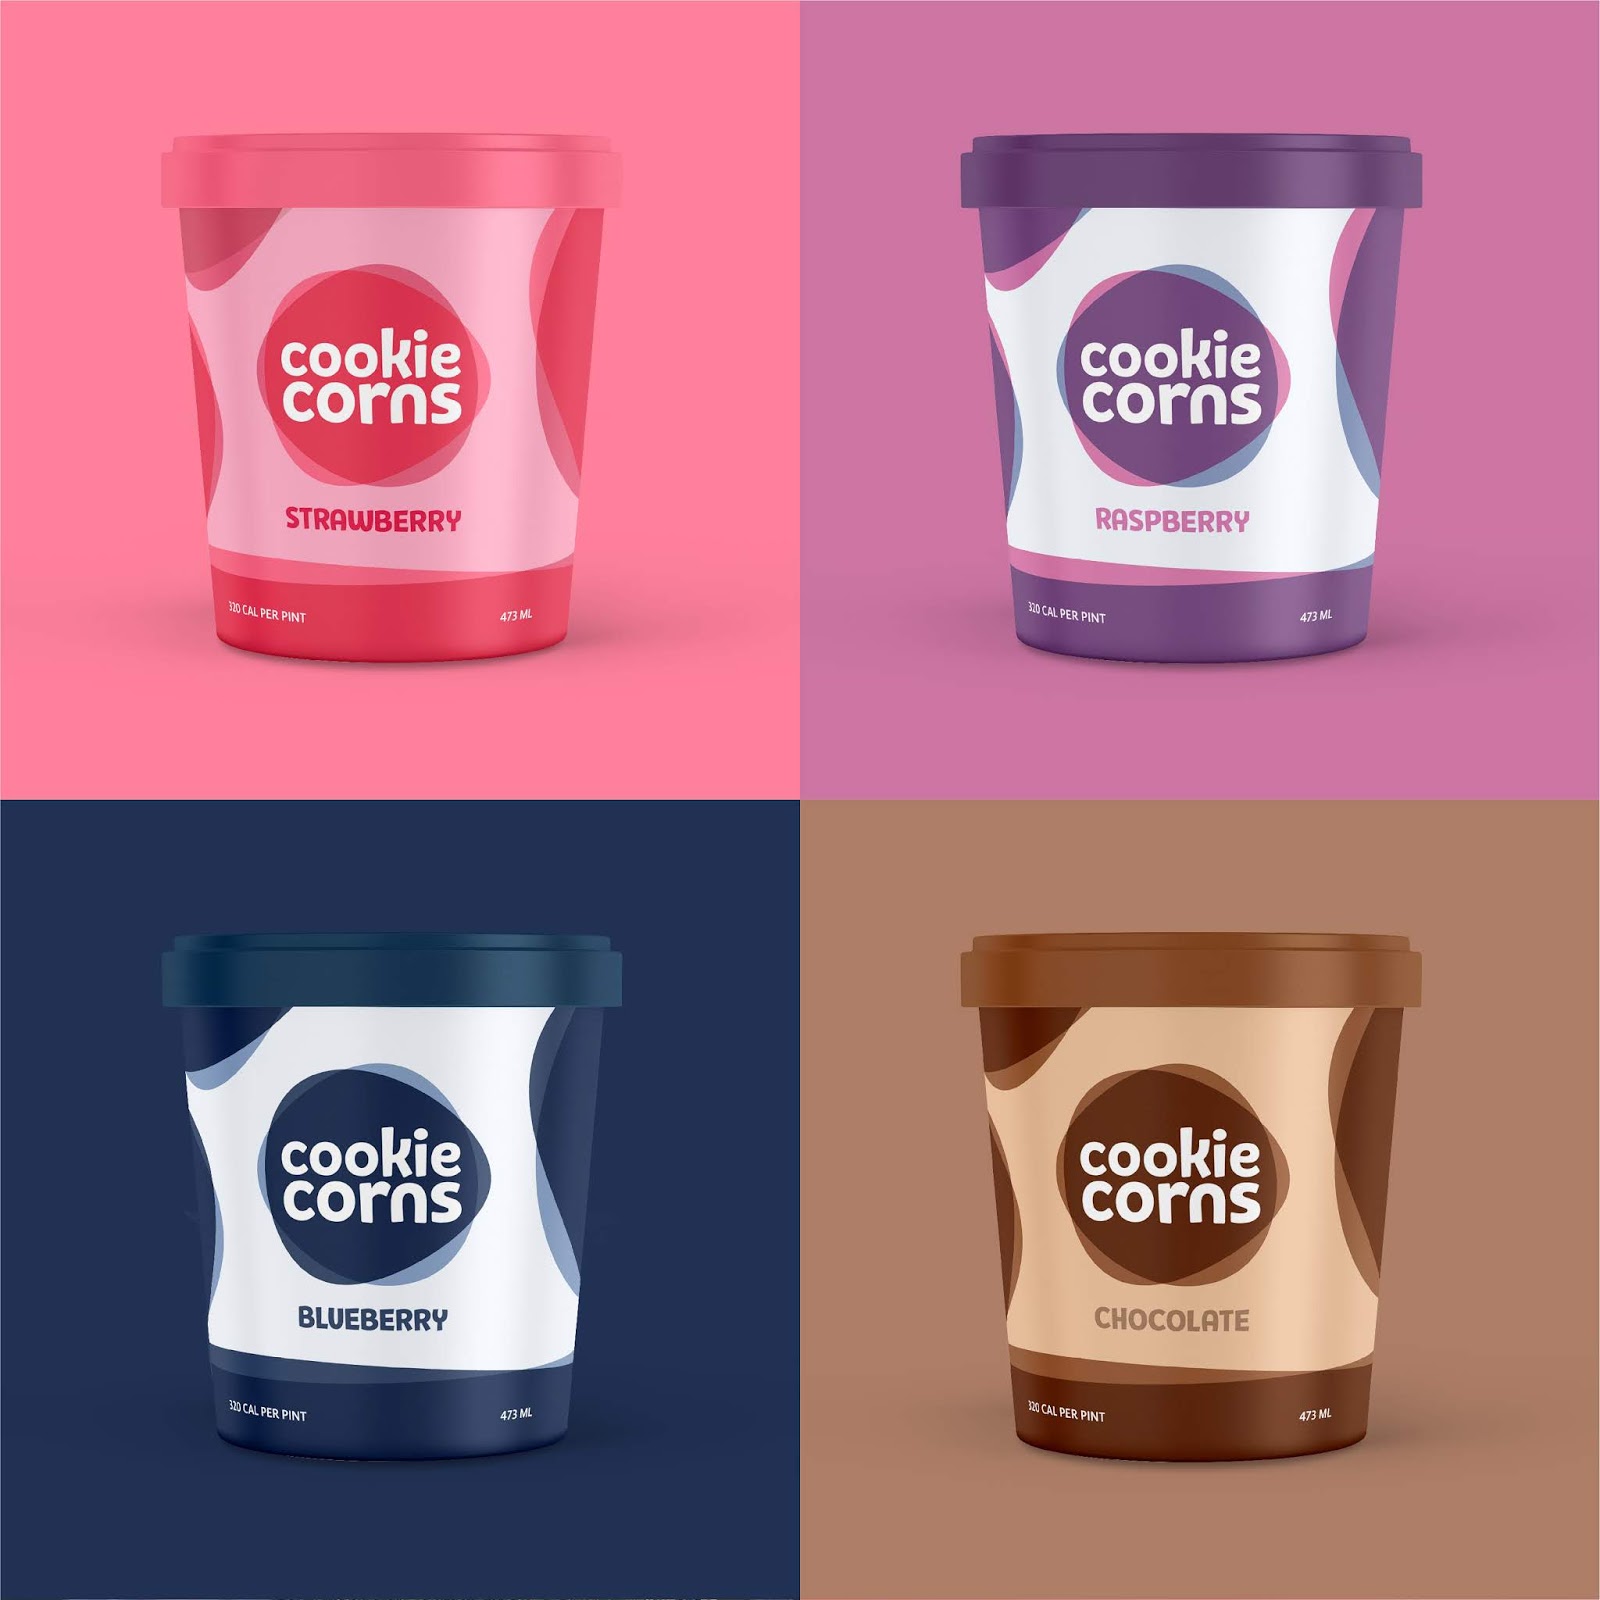 Cookie Corns冰淇淋品牌包装设计